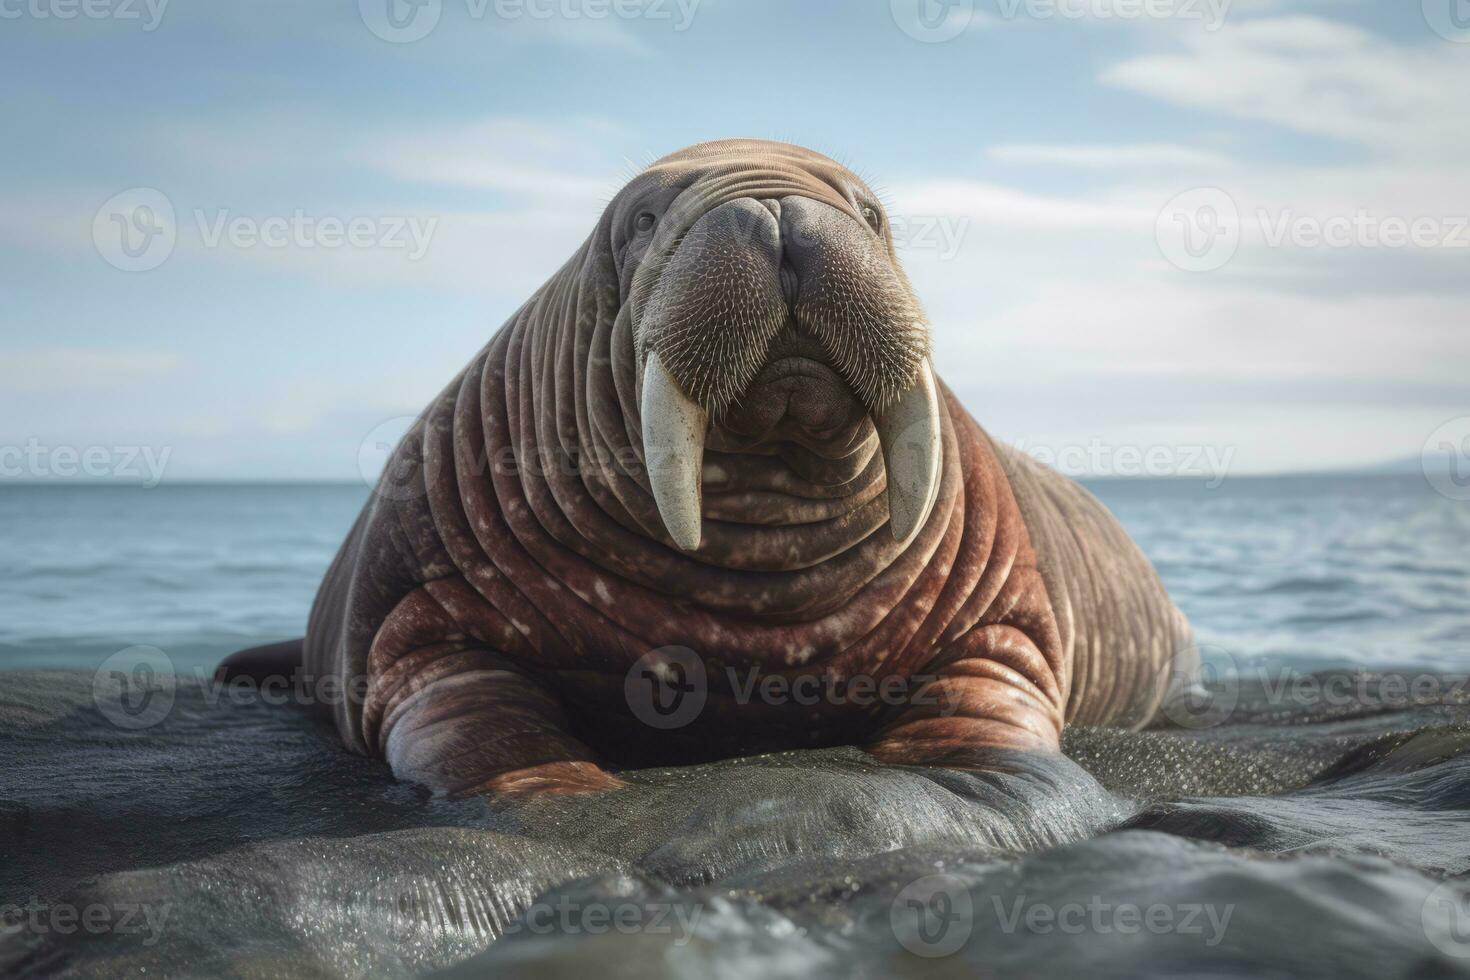 walrus in natuur, nationaal geografie, breed leven dieren. ai gegenereerd. foto